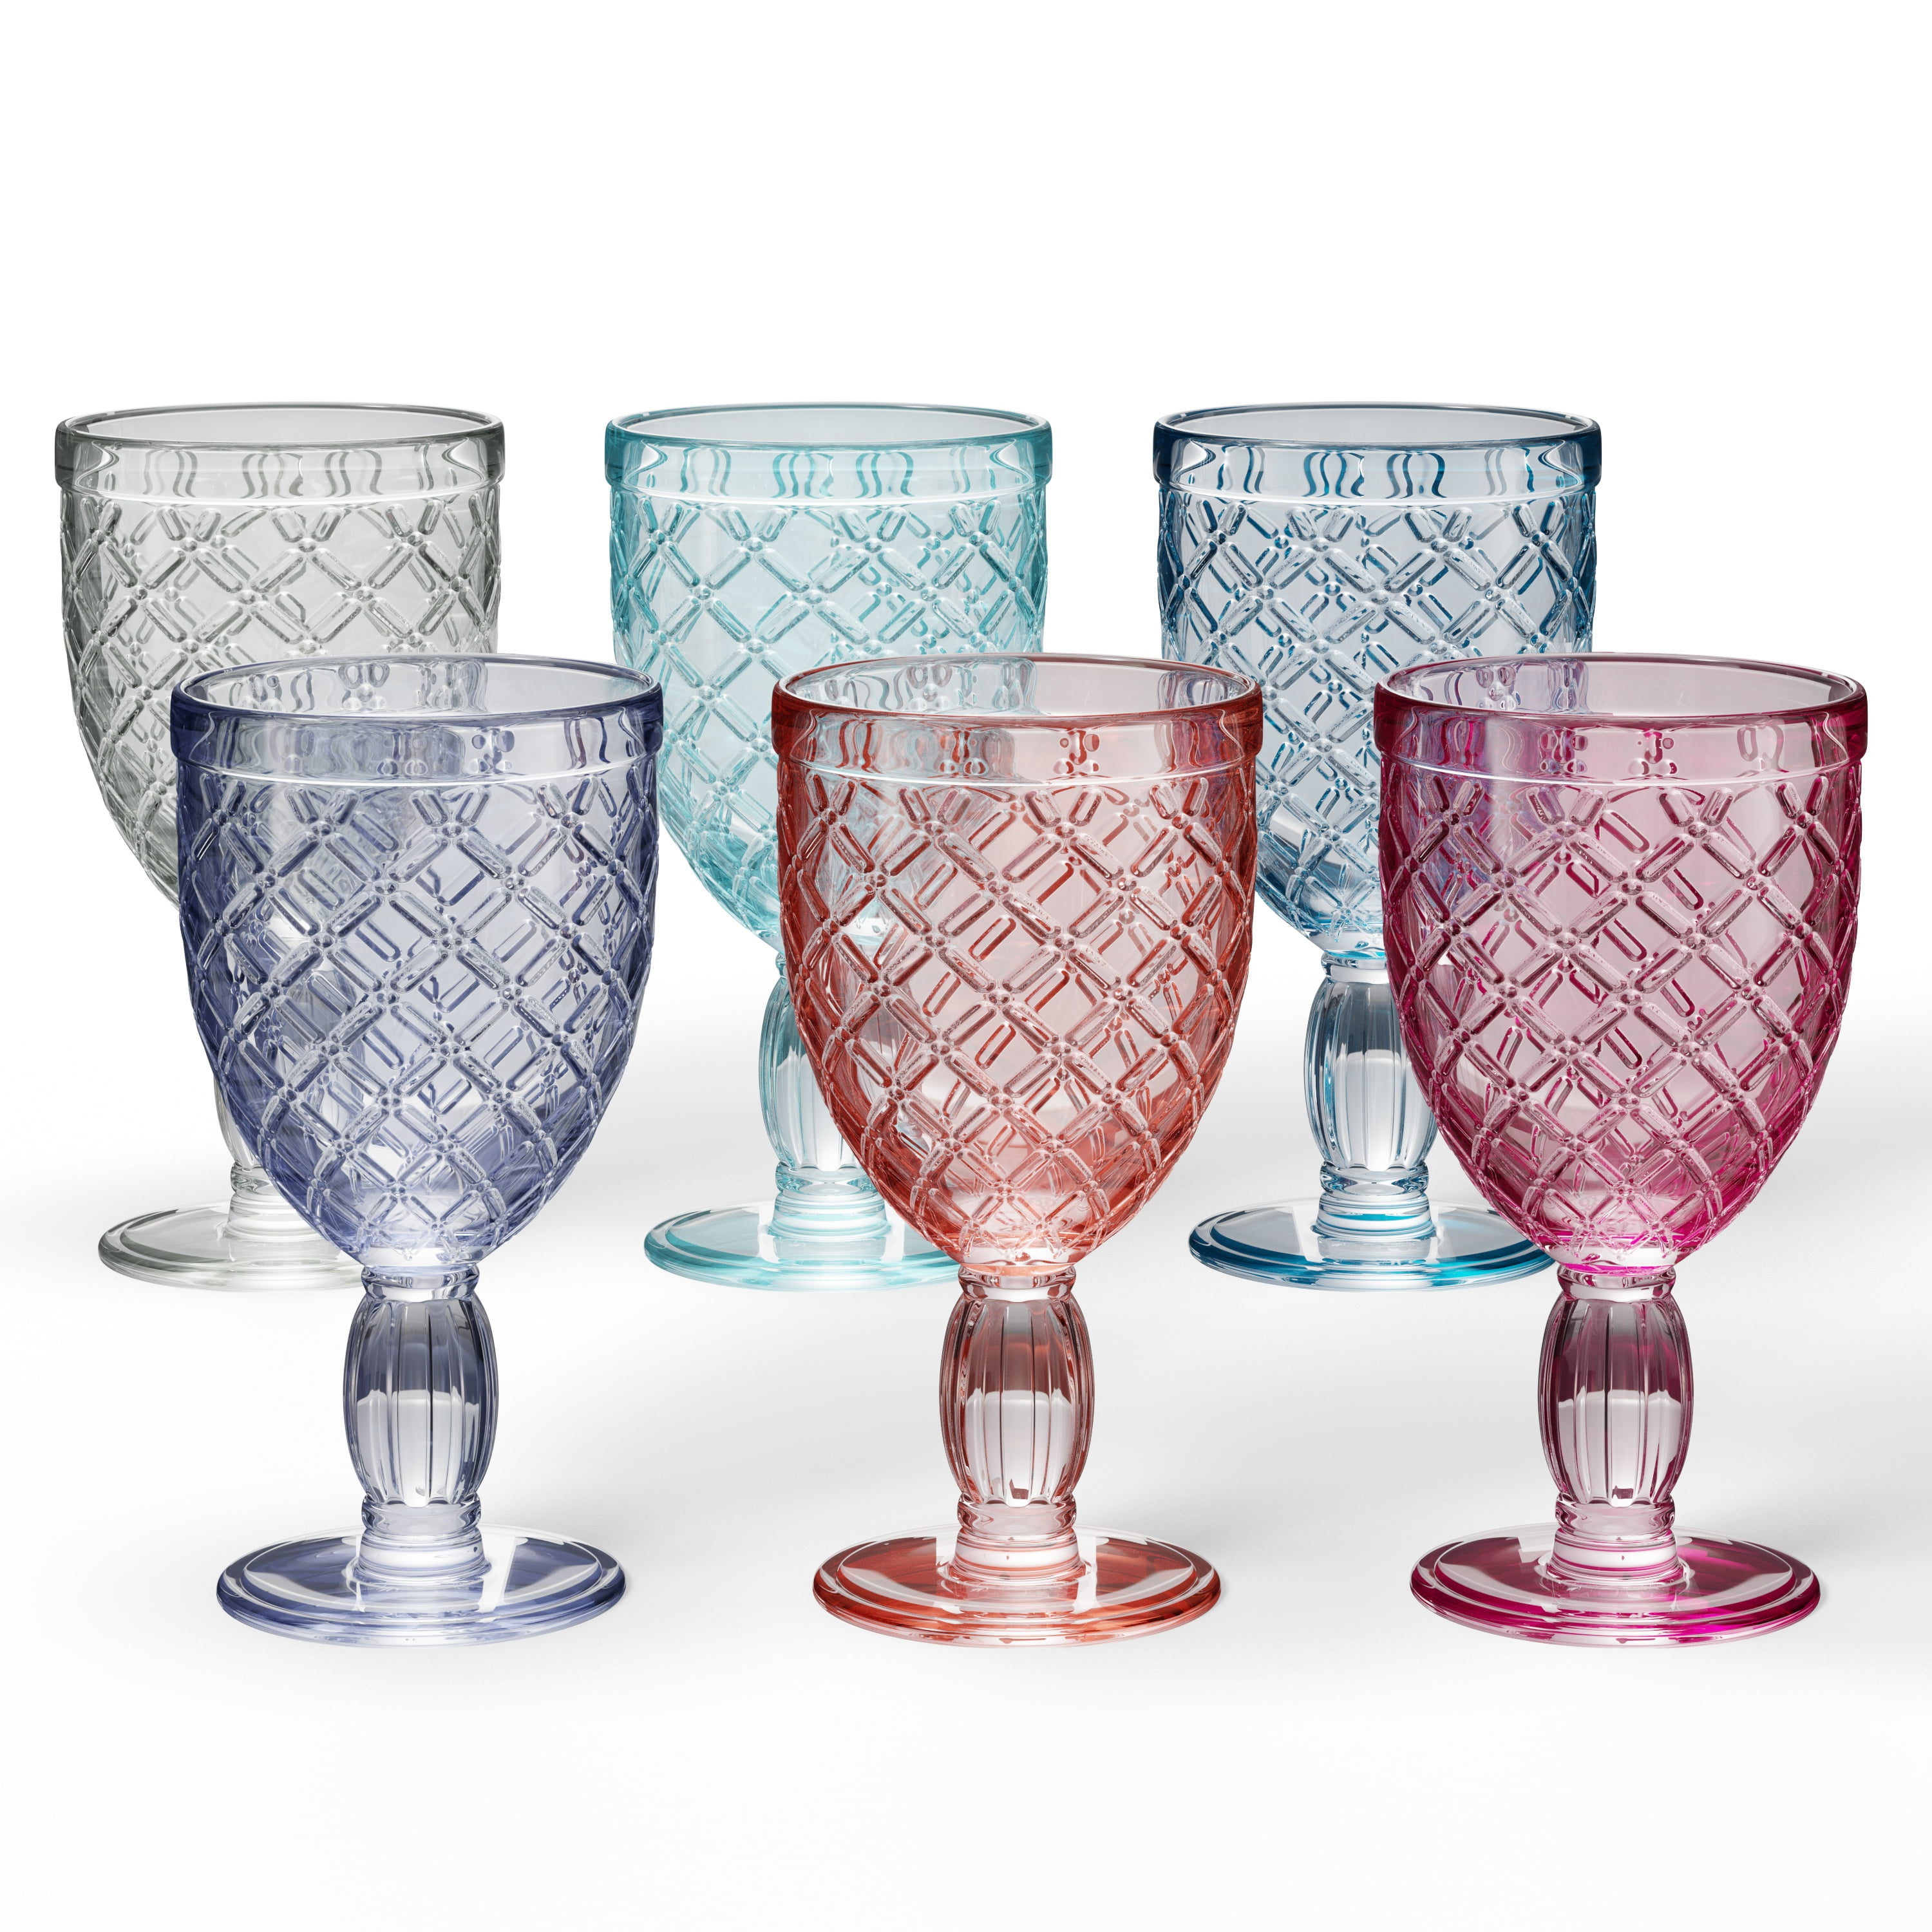 Vikko Classic Goblet Party Glasses, Iced Tea Glasses